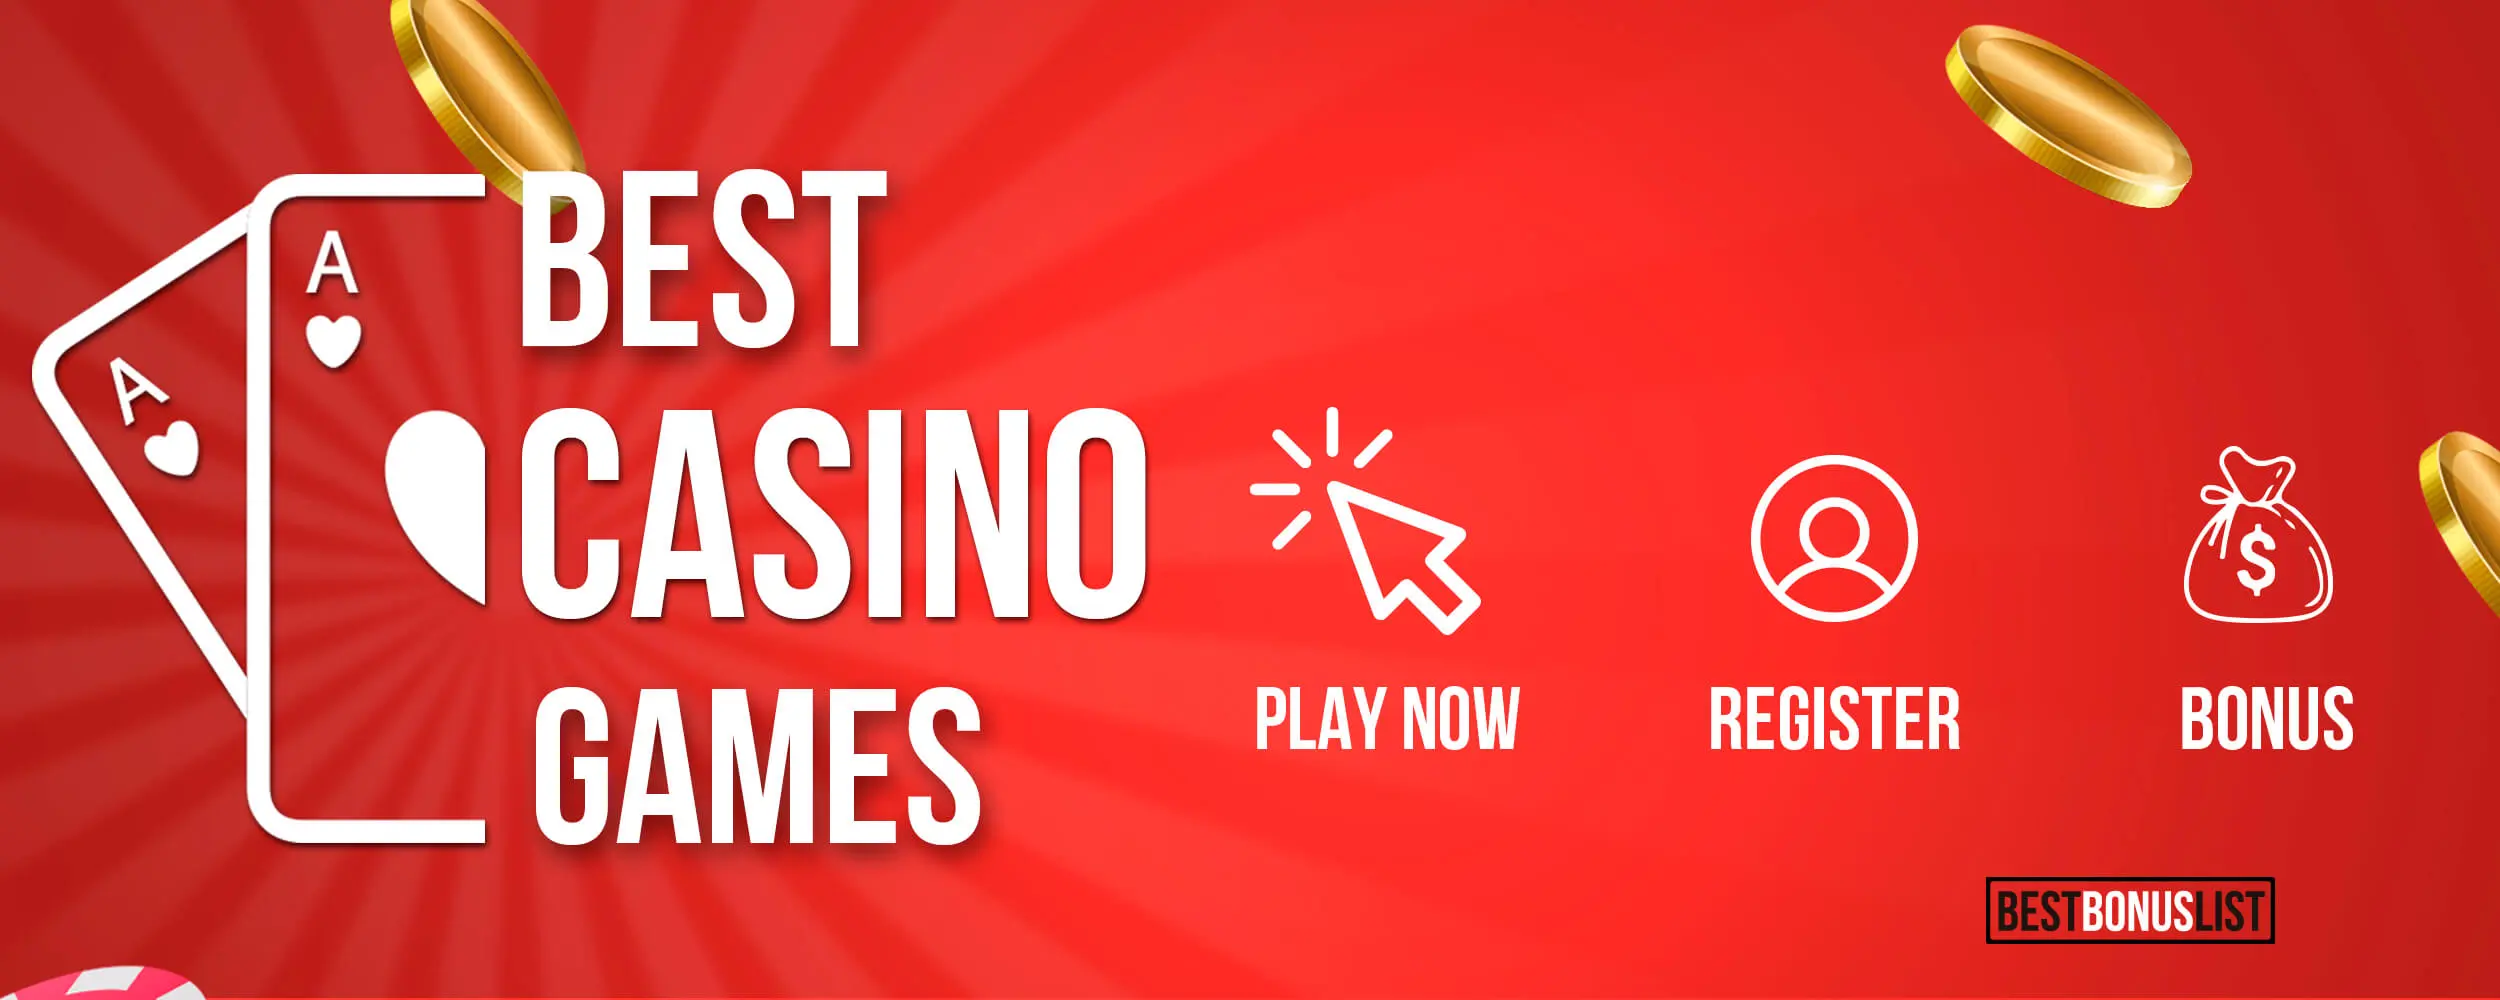 best casino games canada by best bonus list